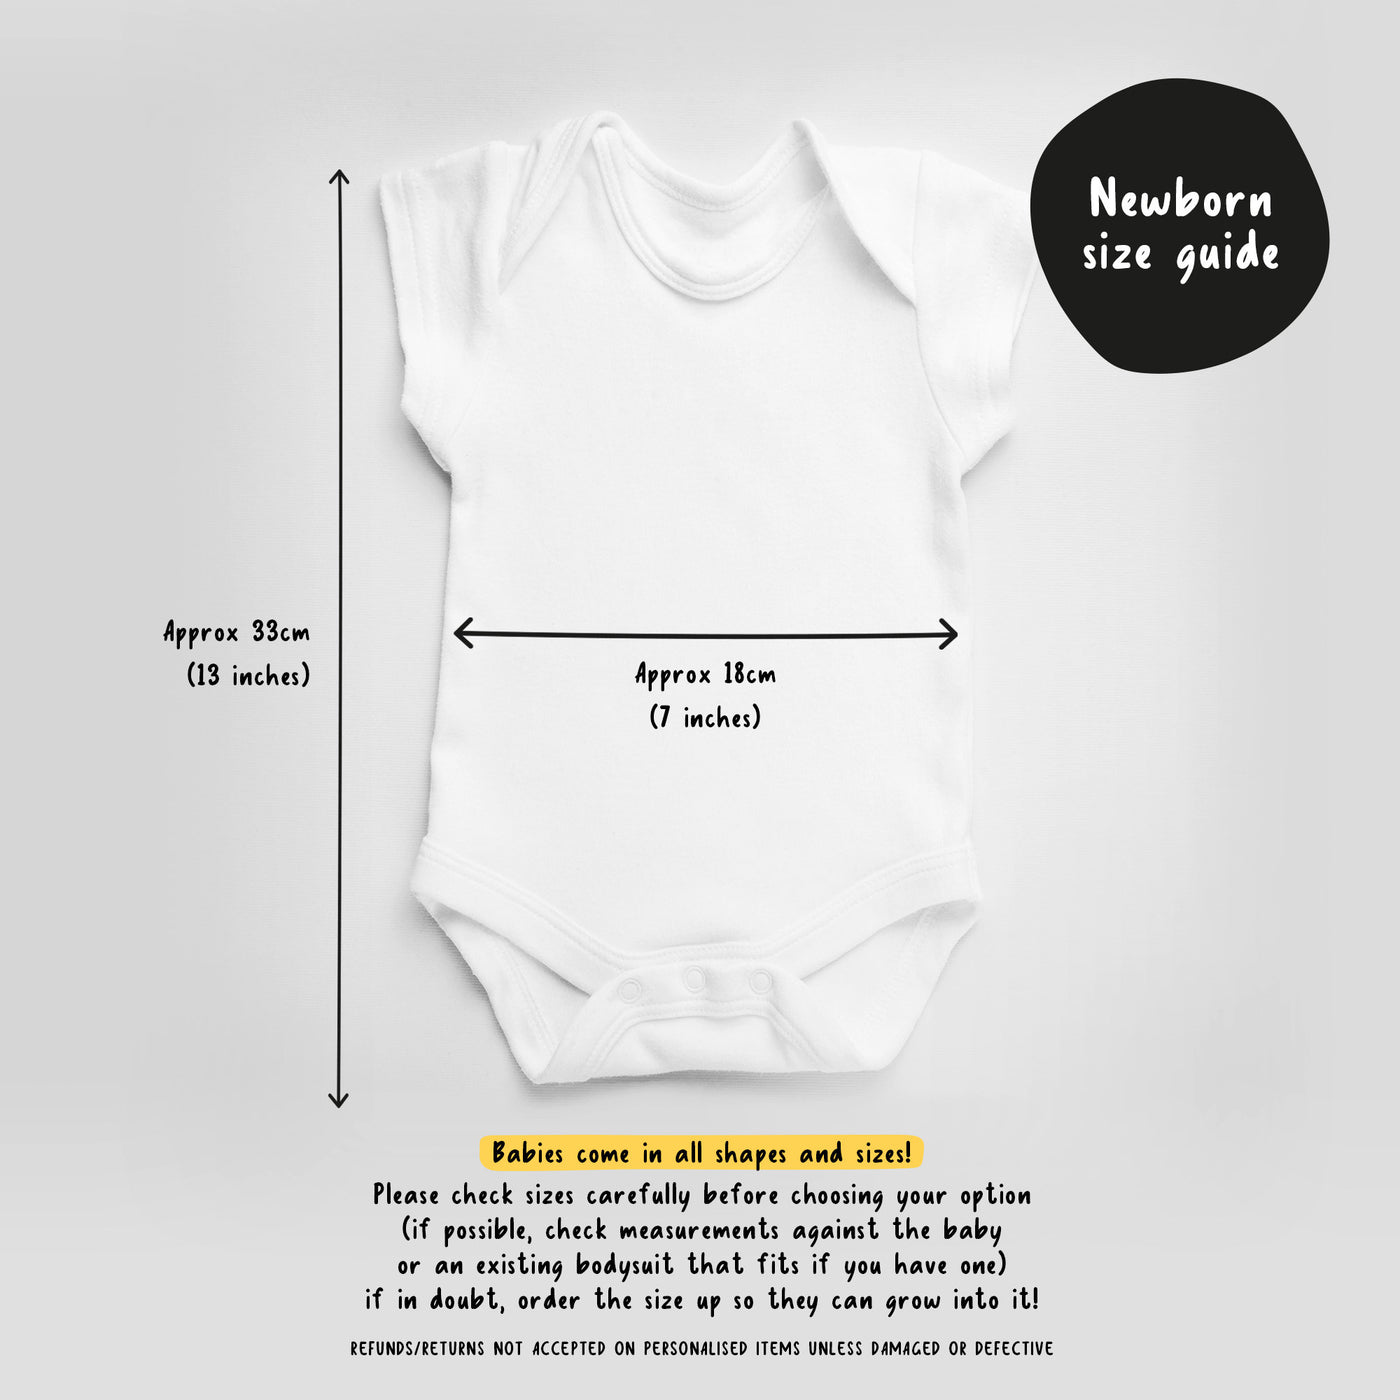 Hello Tiny Human Personalised Baby Bodysuit